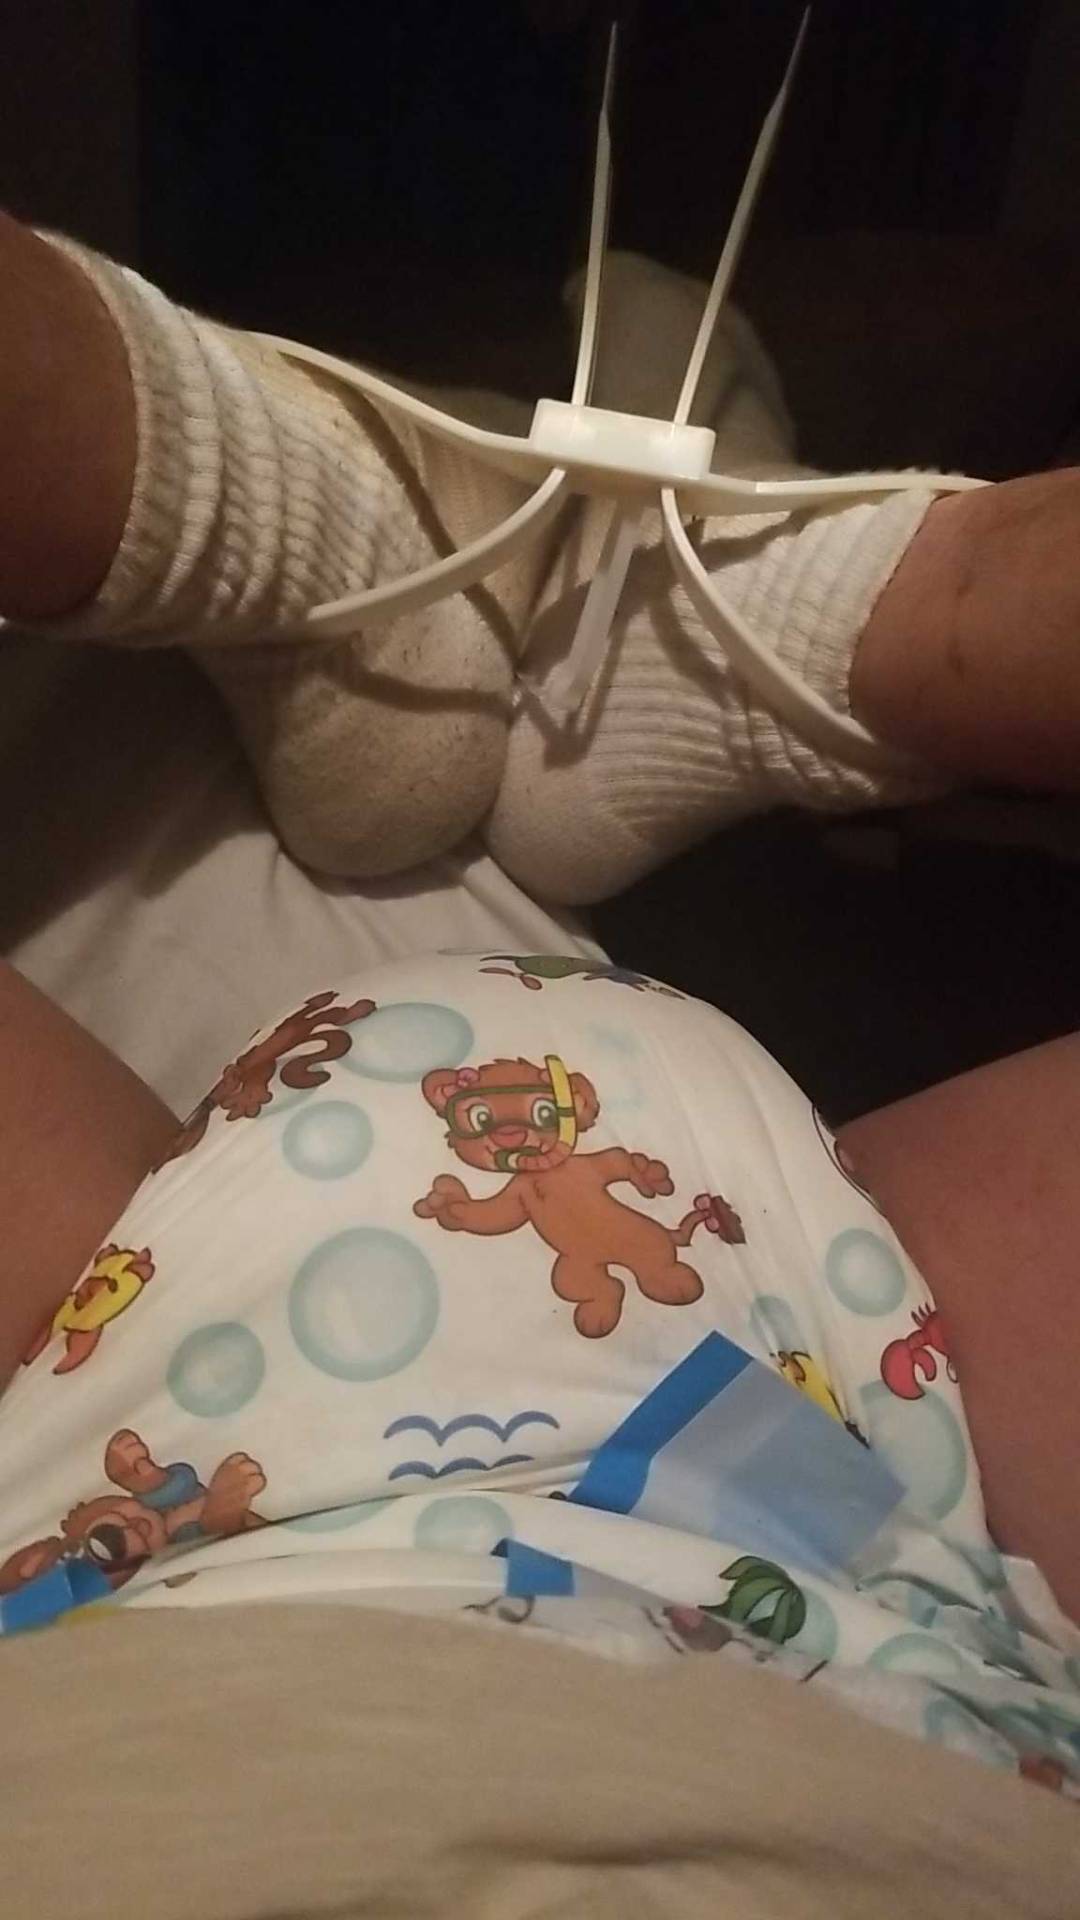 Diapers improper prisoner treatment